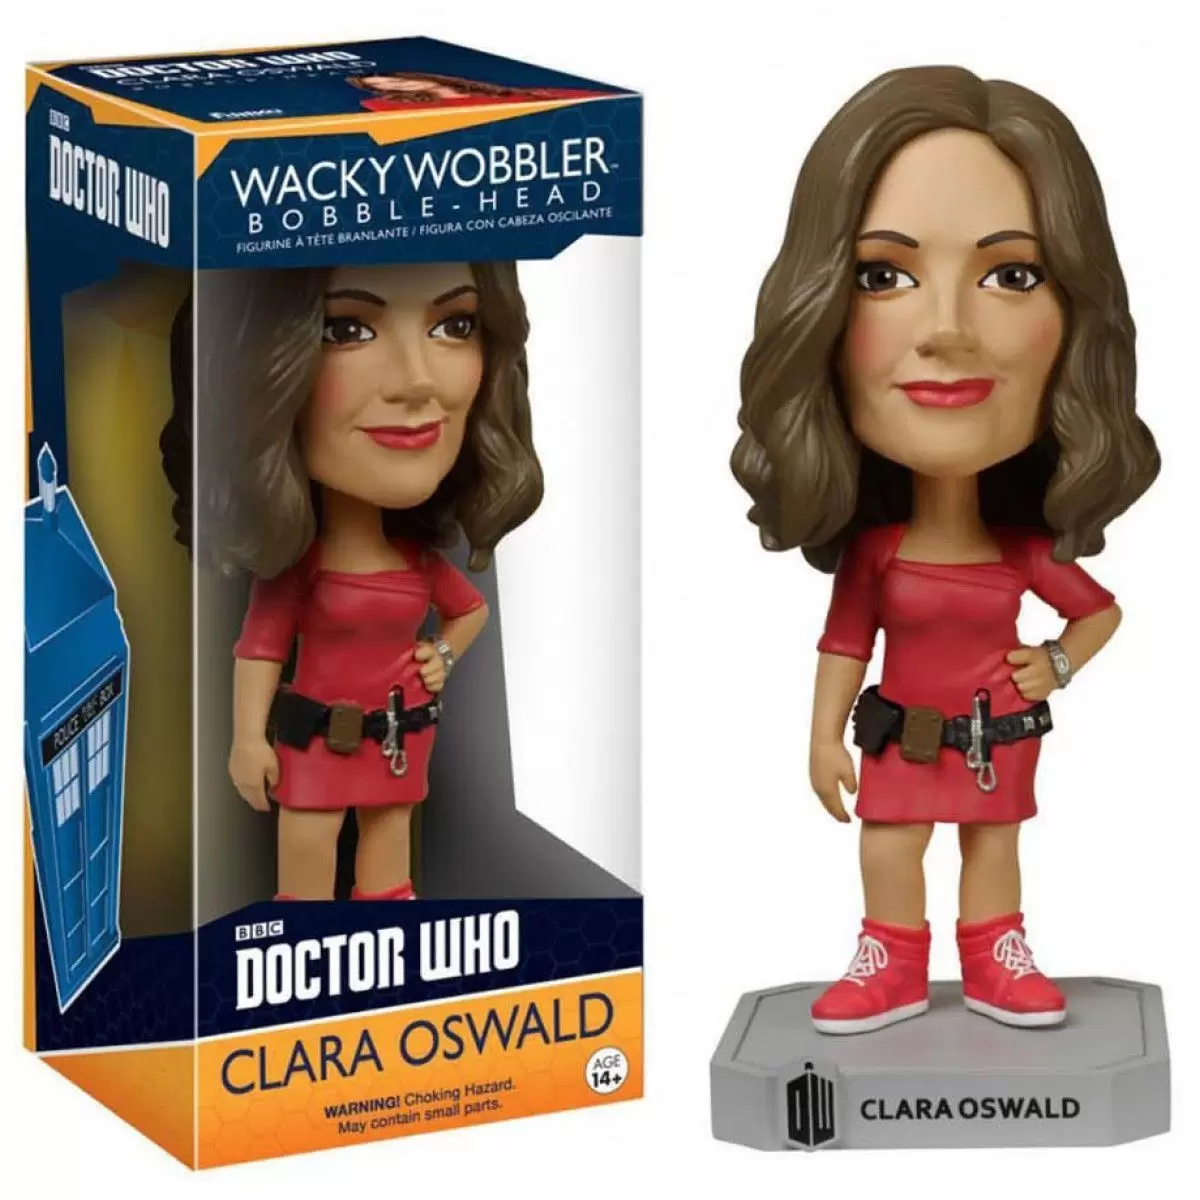 Wacky Wobbler TV Shows - Doctor Who - Clara Oswald